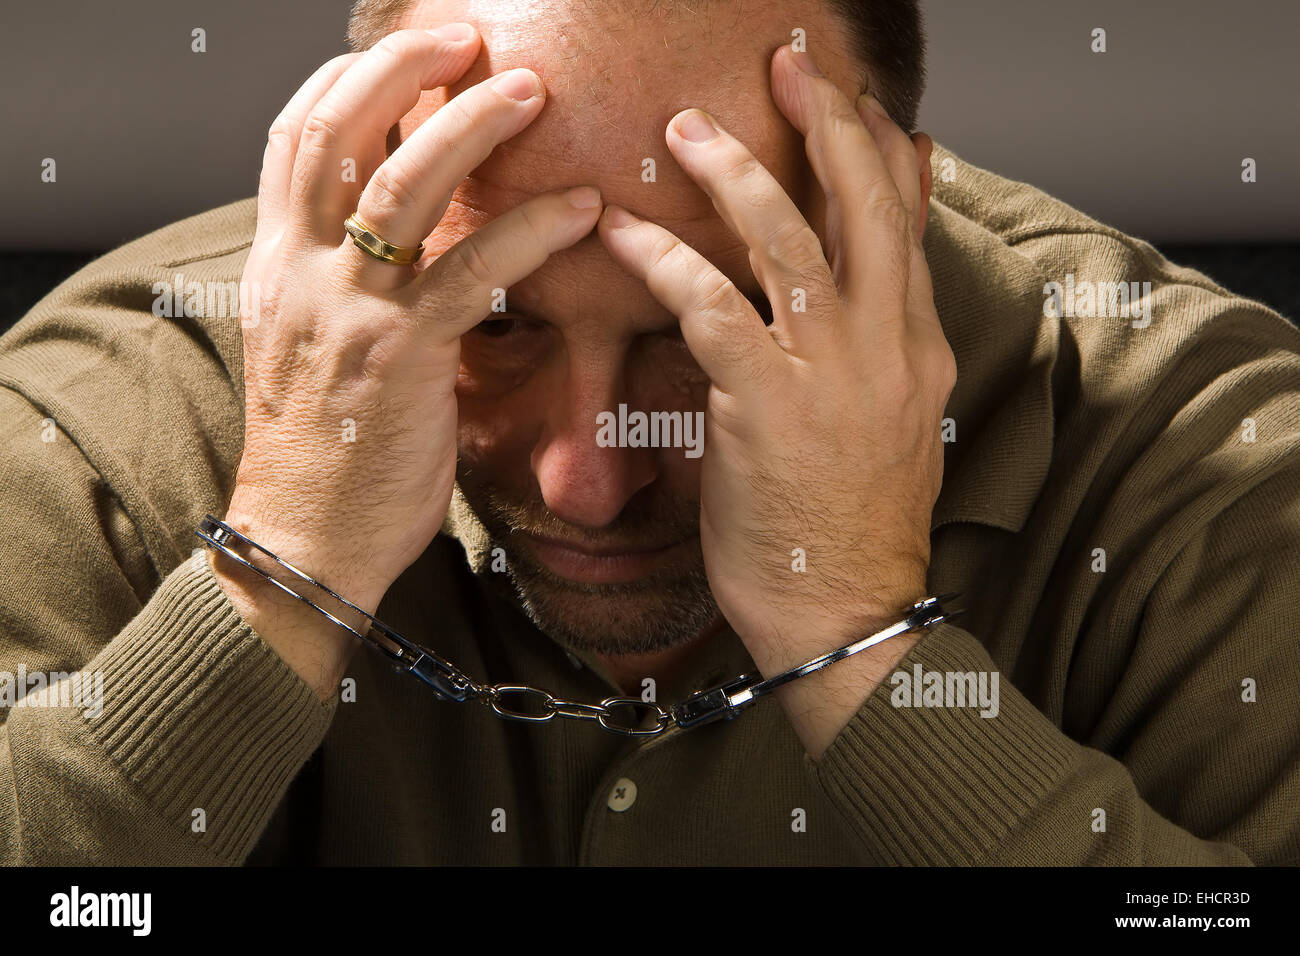 Handcuffs Stock Photo